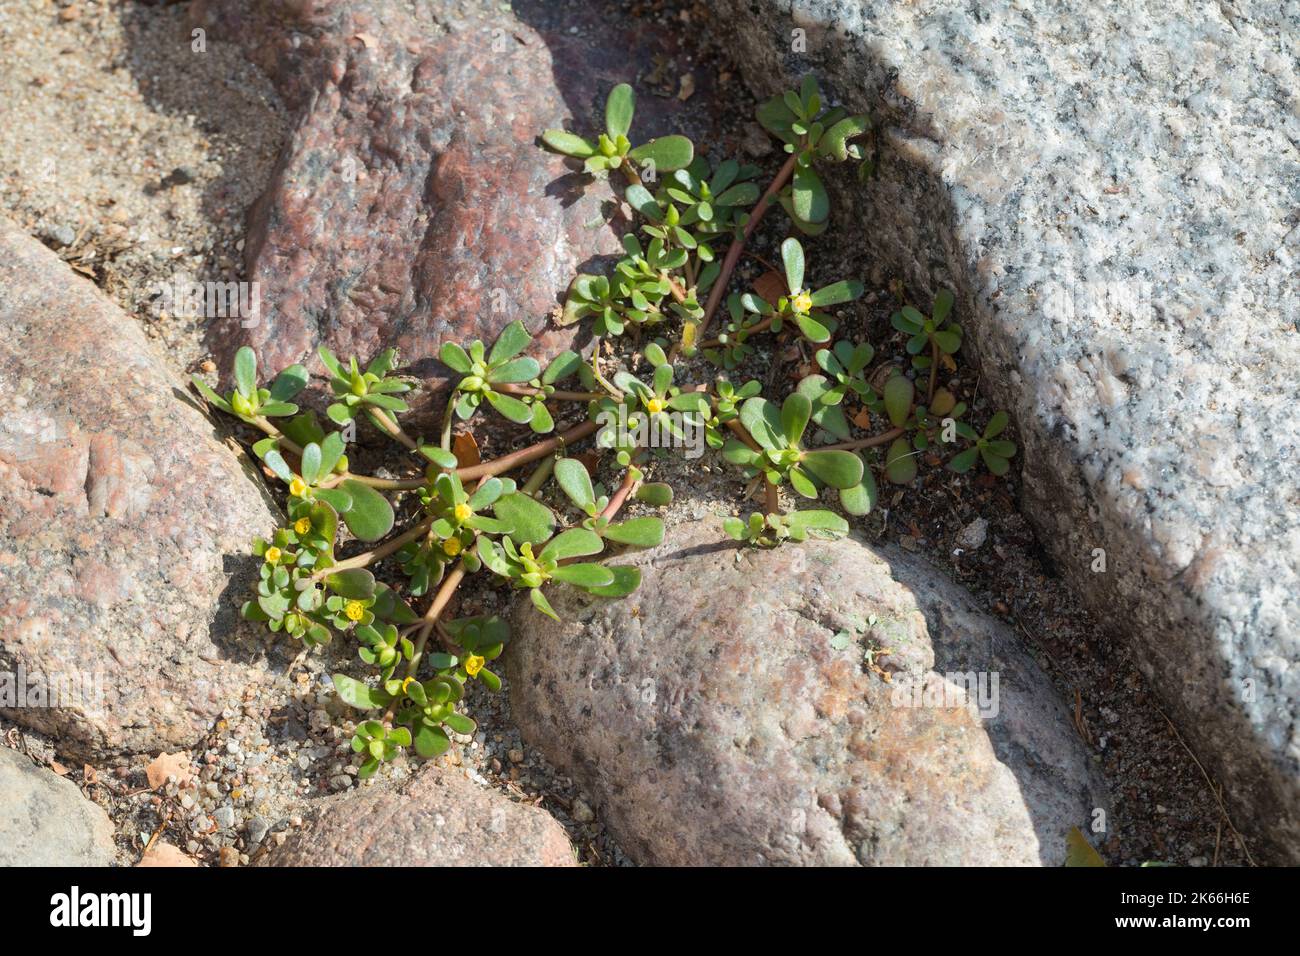 common purslane, green purslane (Portulaca oleracea), growing in paving gaps, Germany Stock Photo